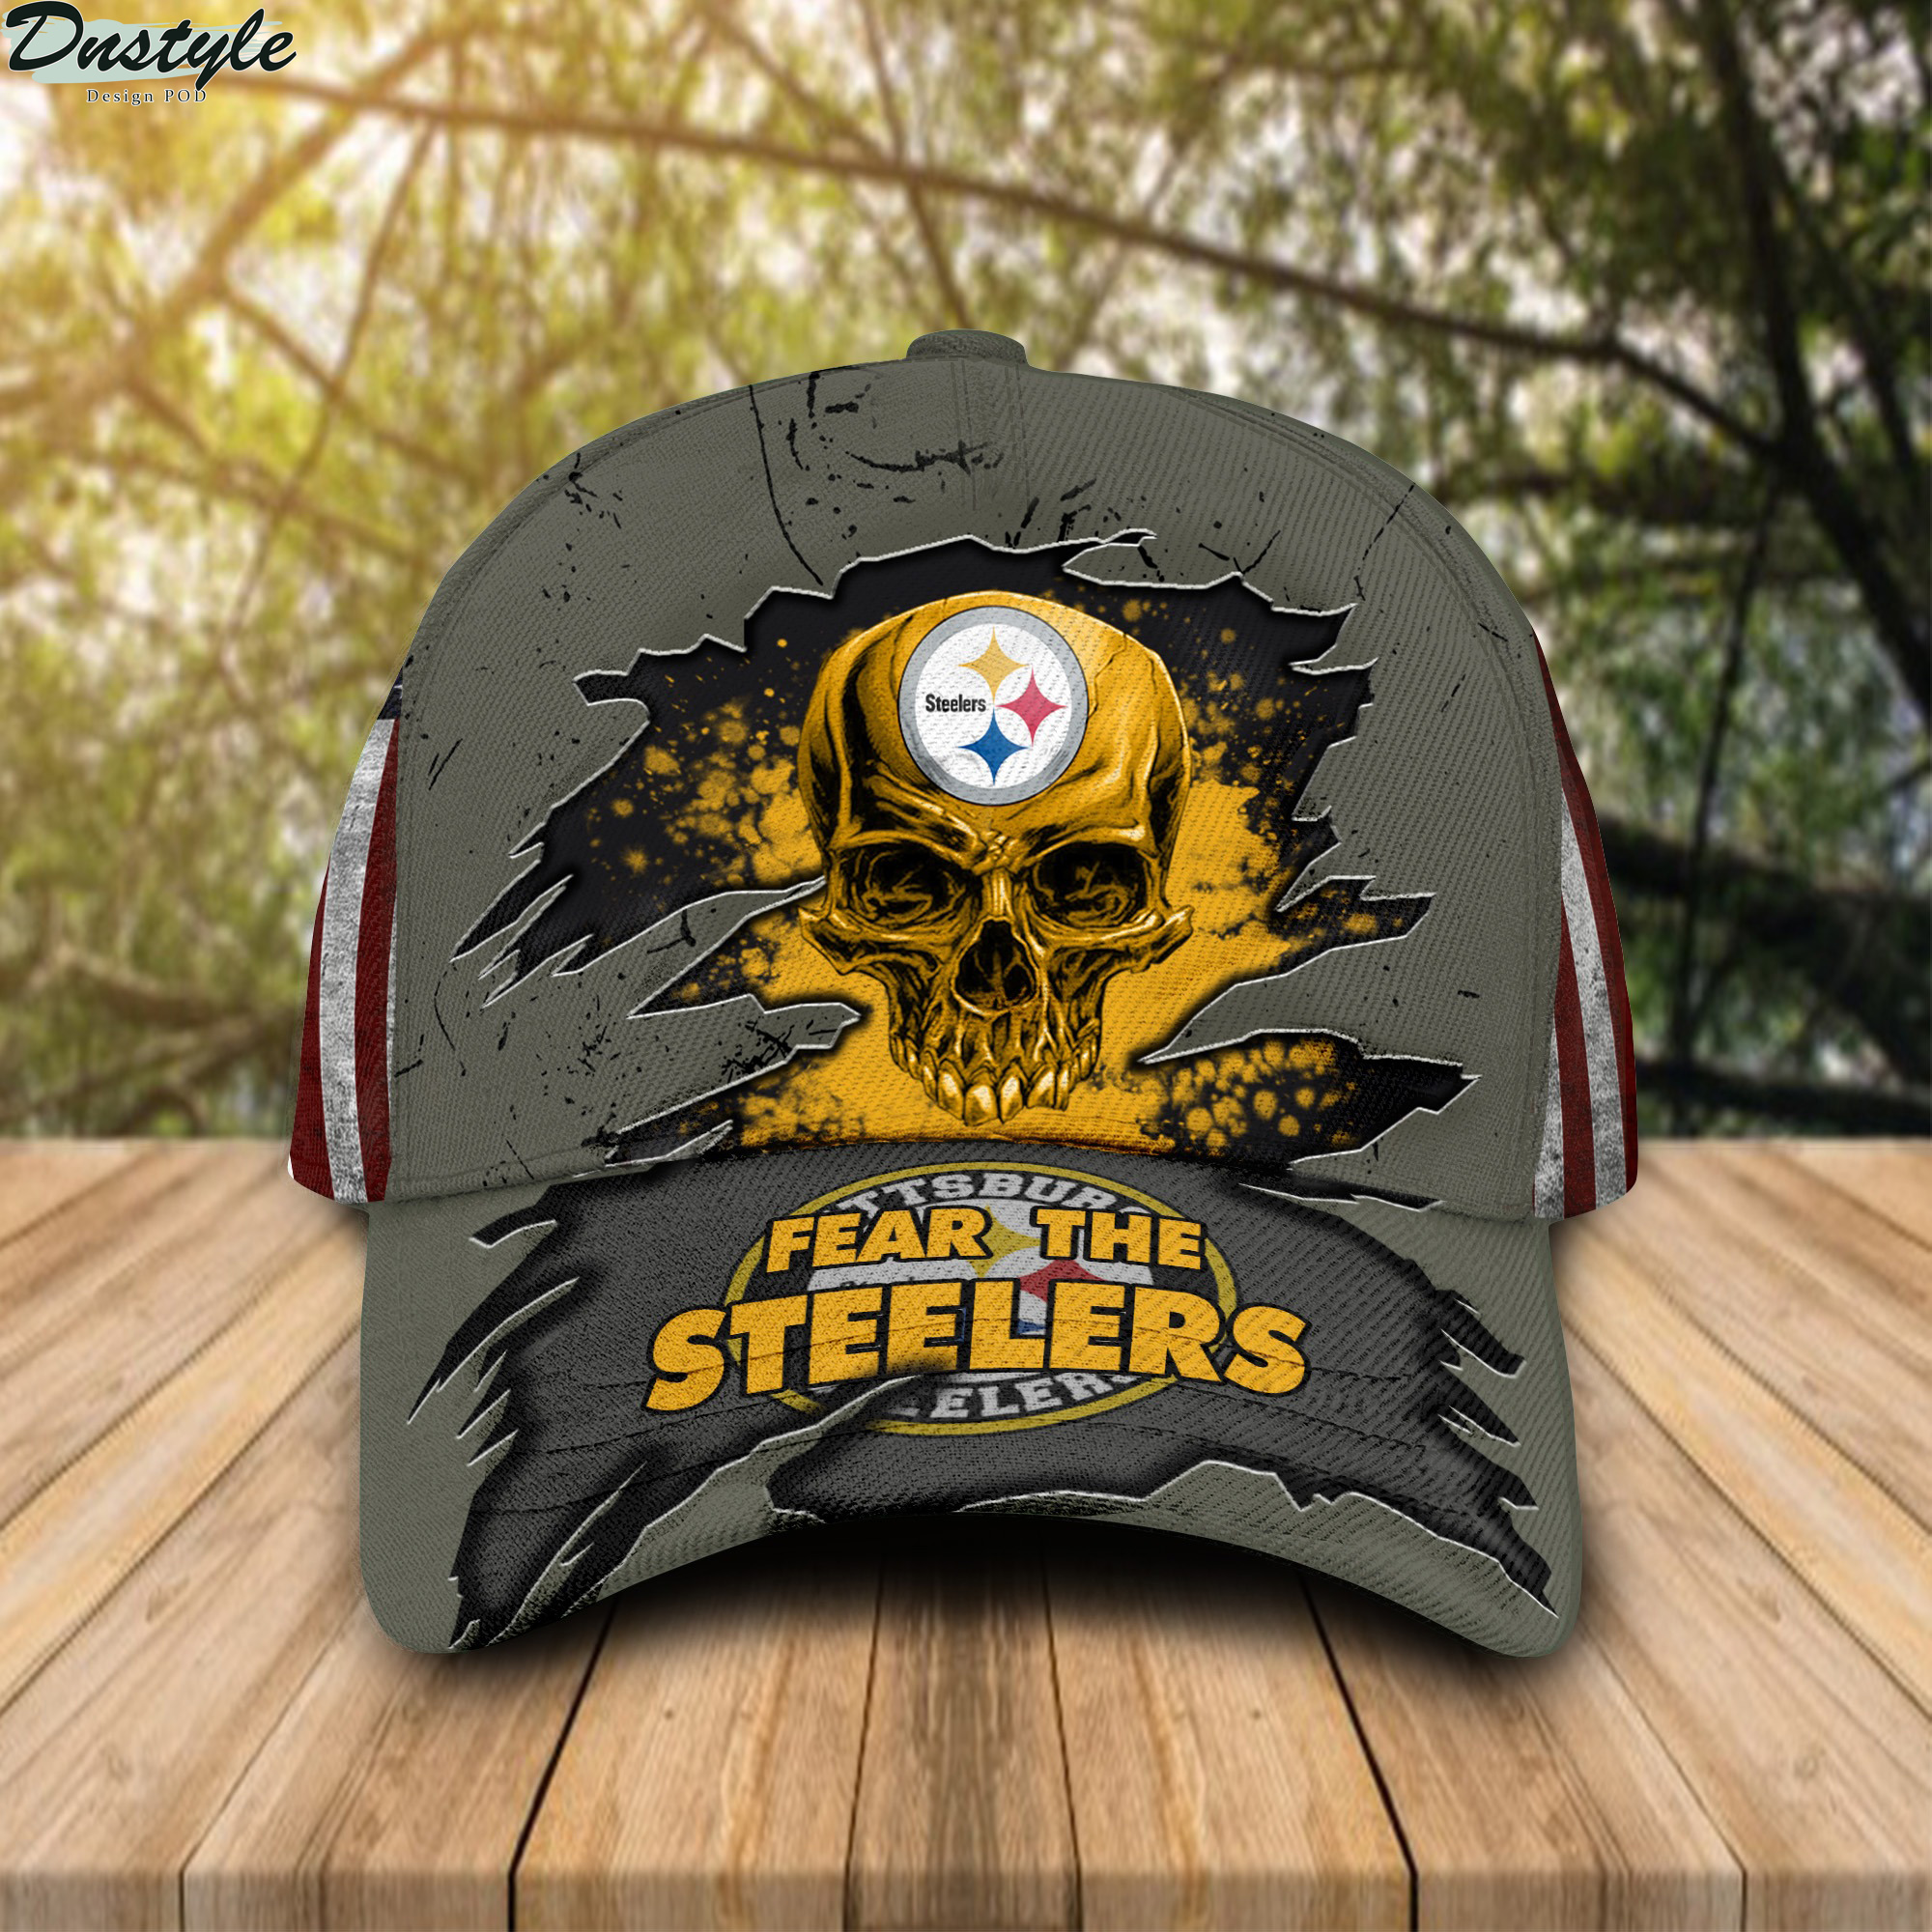 Pittsburgh Steelers fear the steelers cap